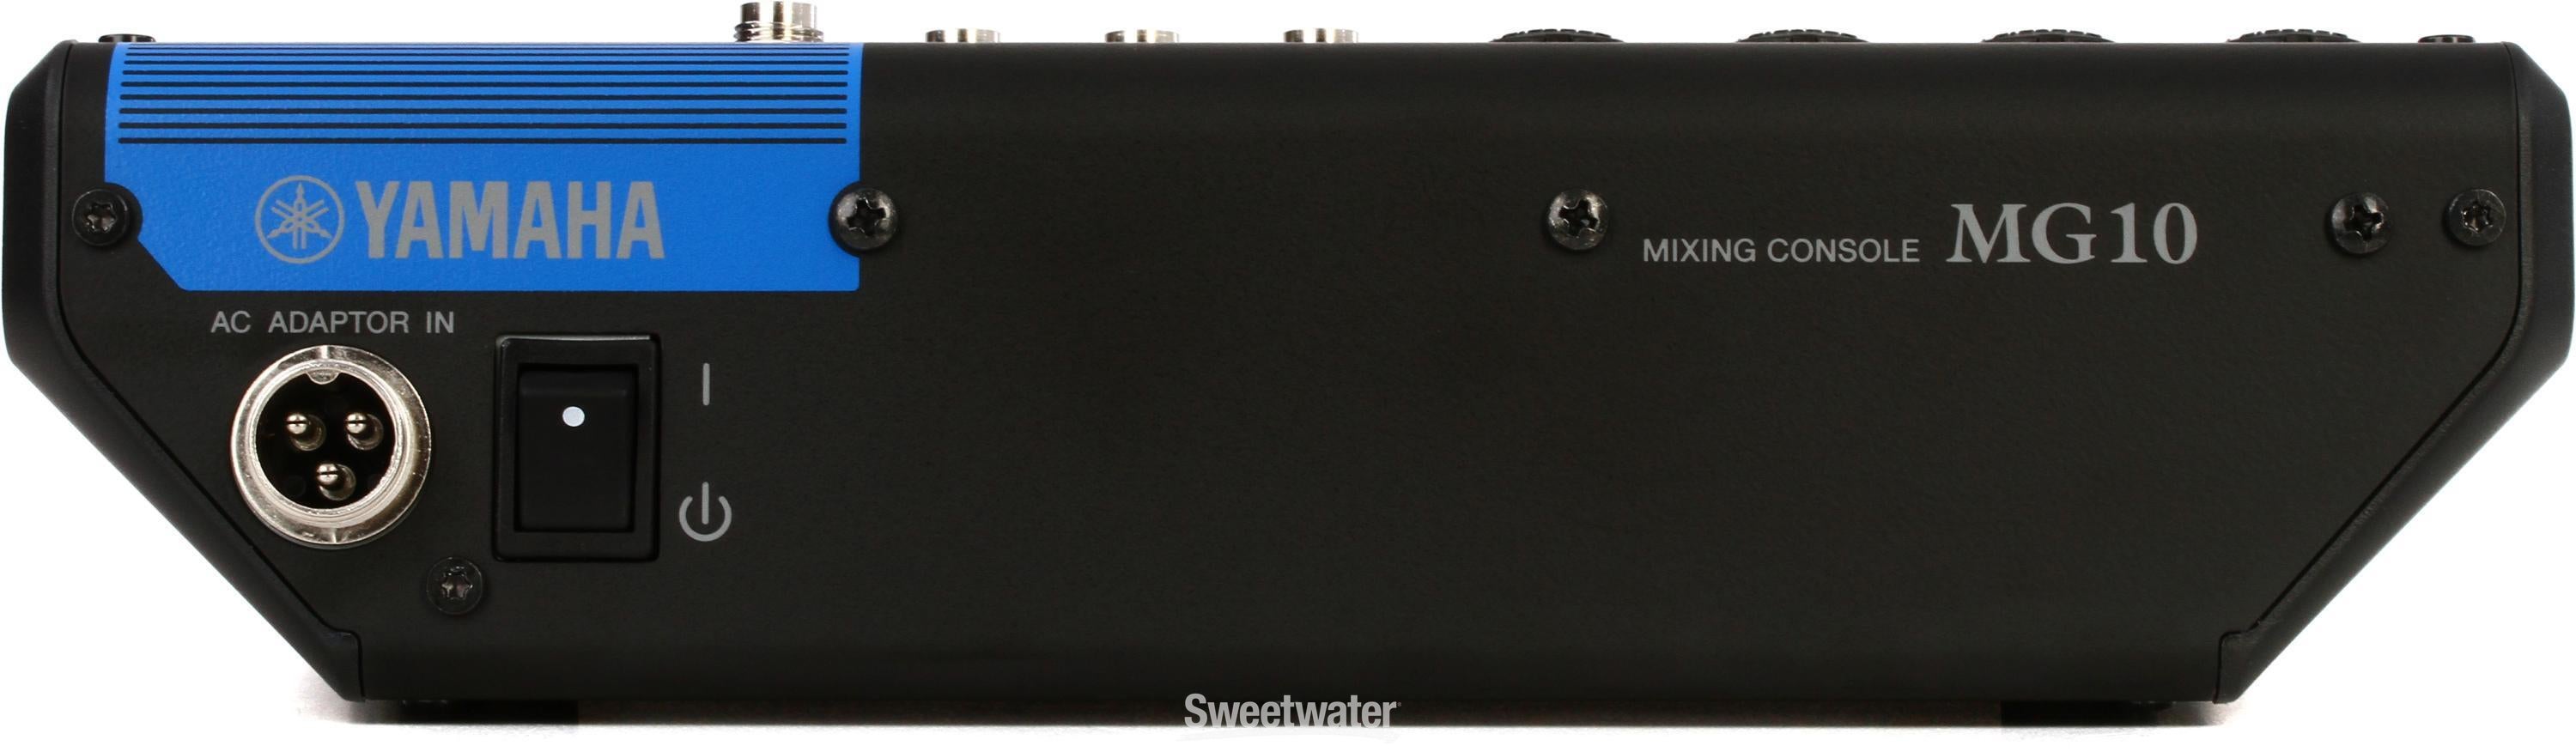 Yamaha MG10 10-channel Analog Mixer | Sweetwater